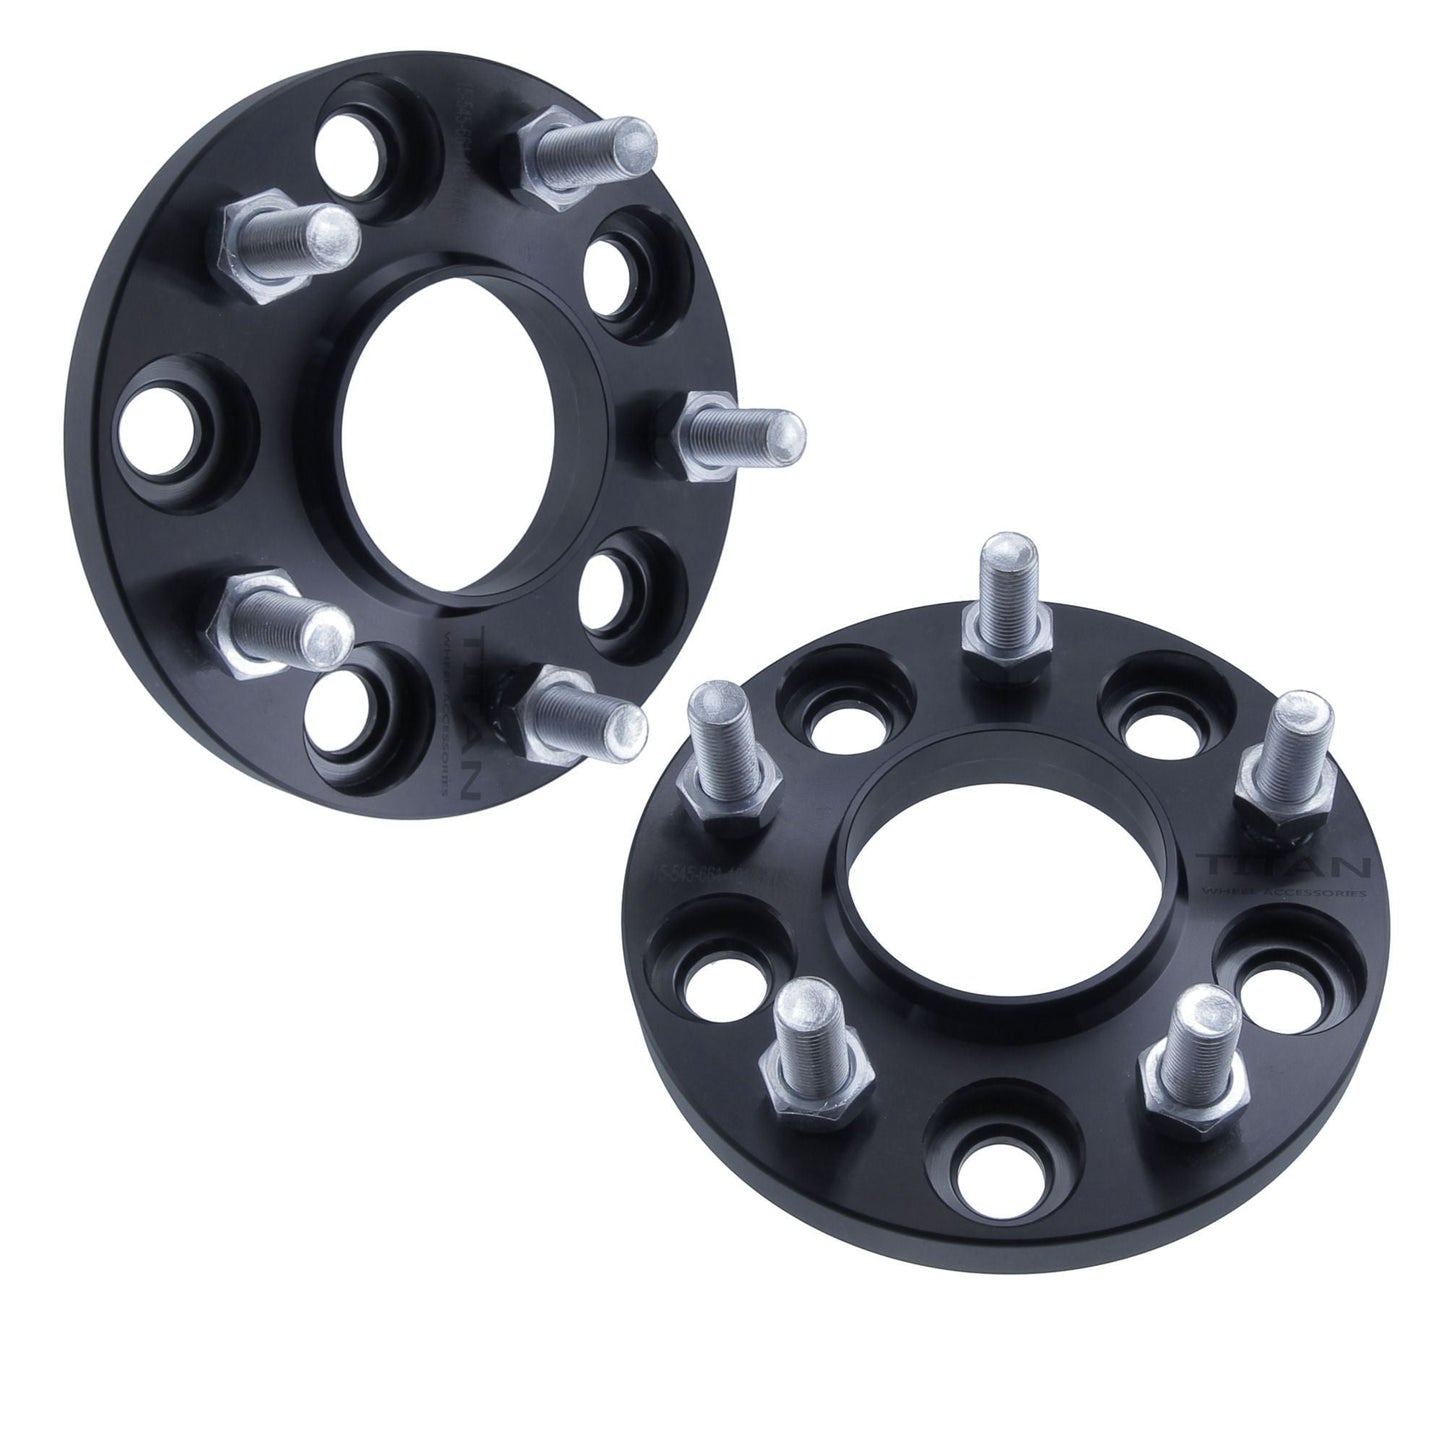 15mm Titan Wheel Spacers for Nissan Infiniti Q50 G35 G37 350Z 370Z Altima Maxima | 5x114.3 (5x4.5) | 66.1 Hubcentric |12x1.25 Studs | Titan Wheel Accessories